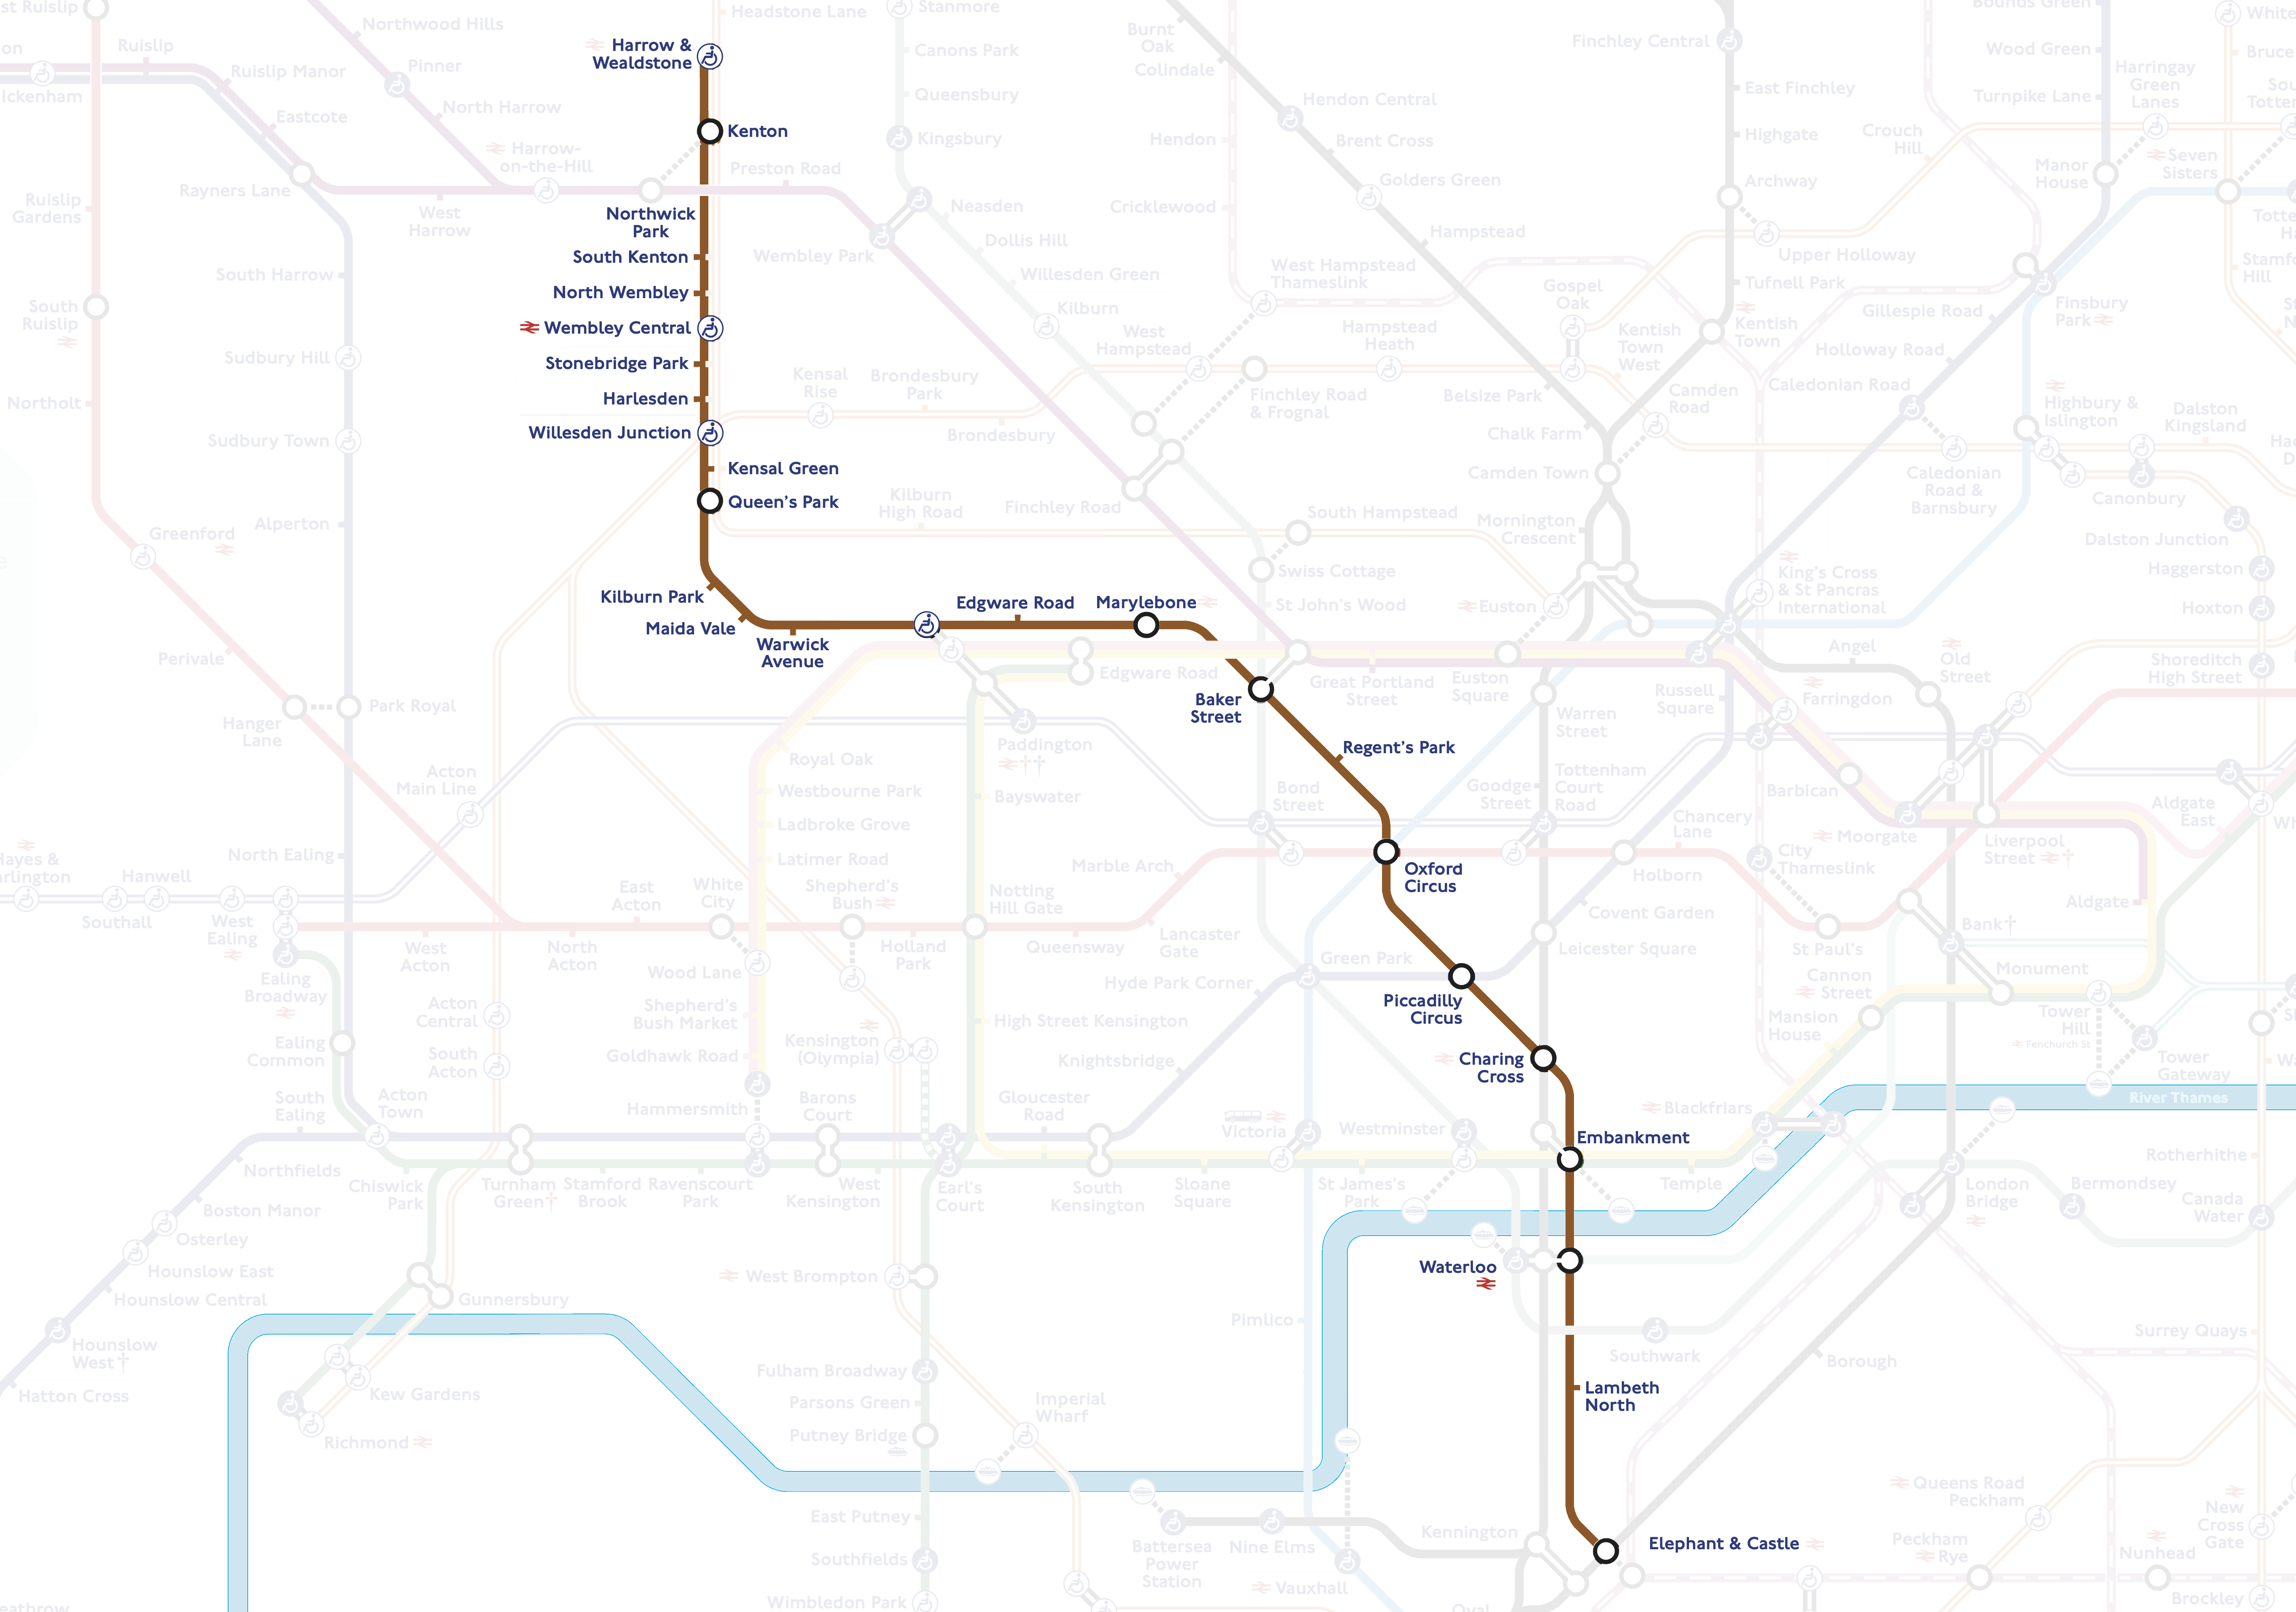 I walked the Bakerloo line! What a weirdo.